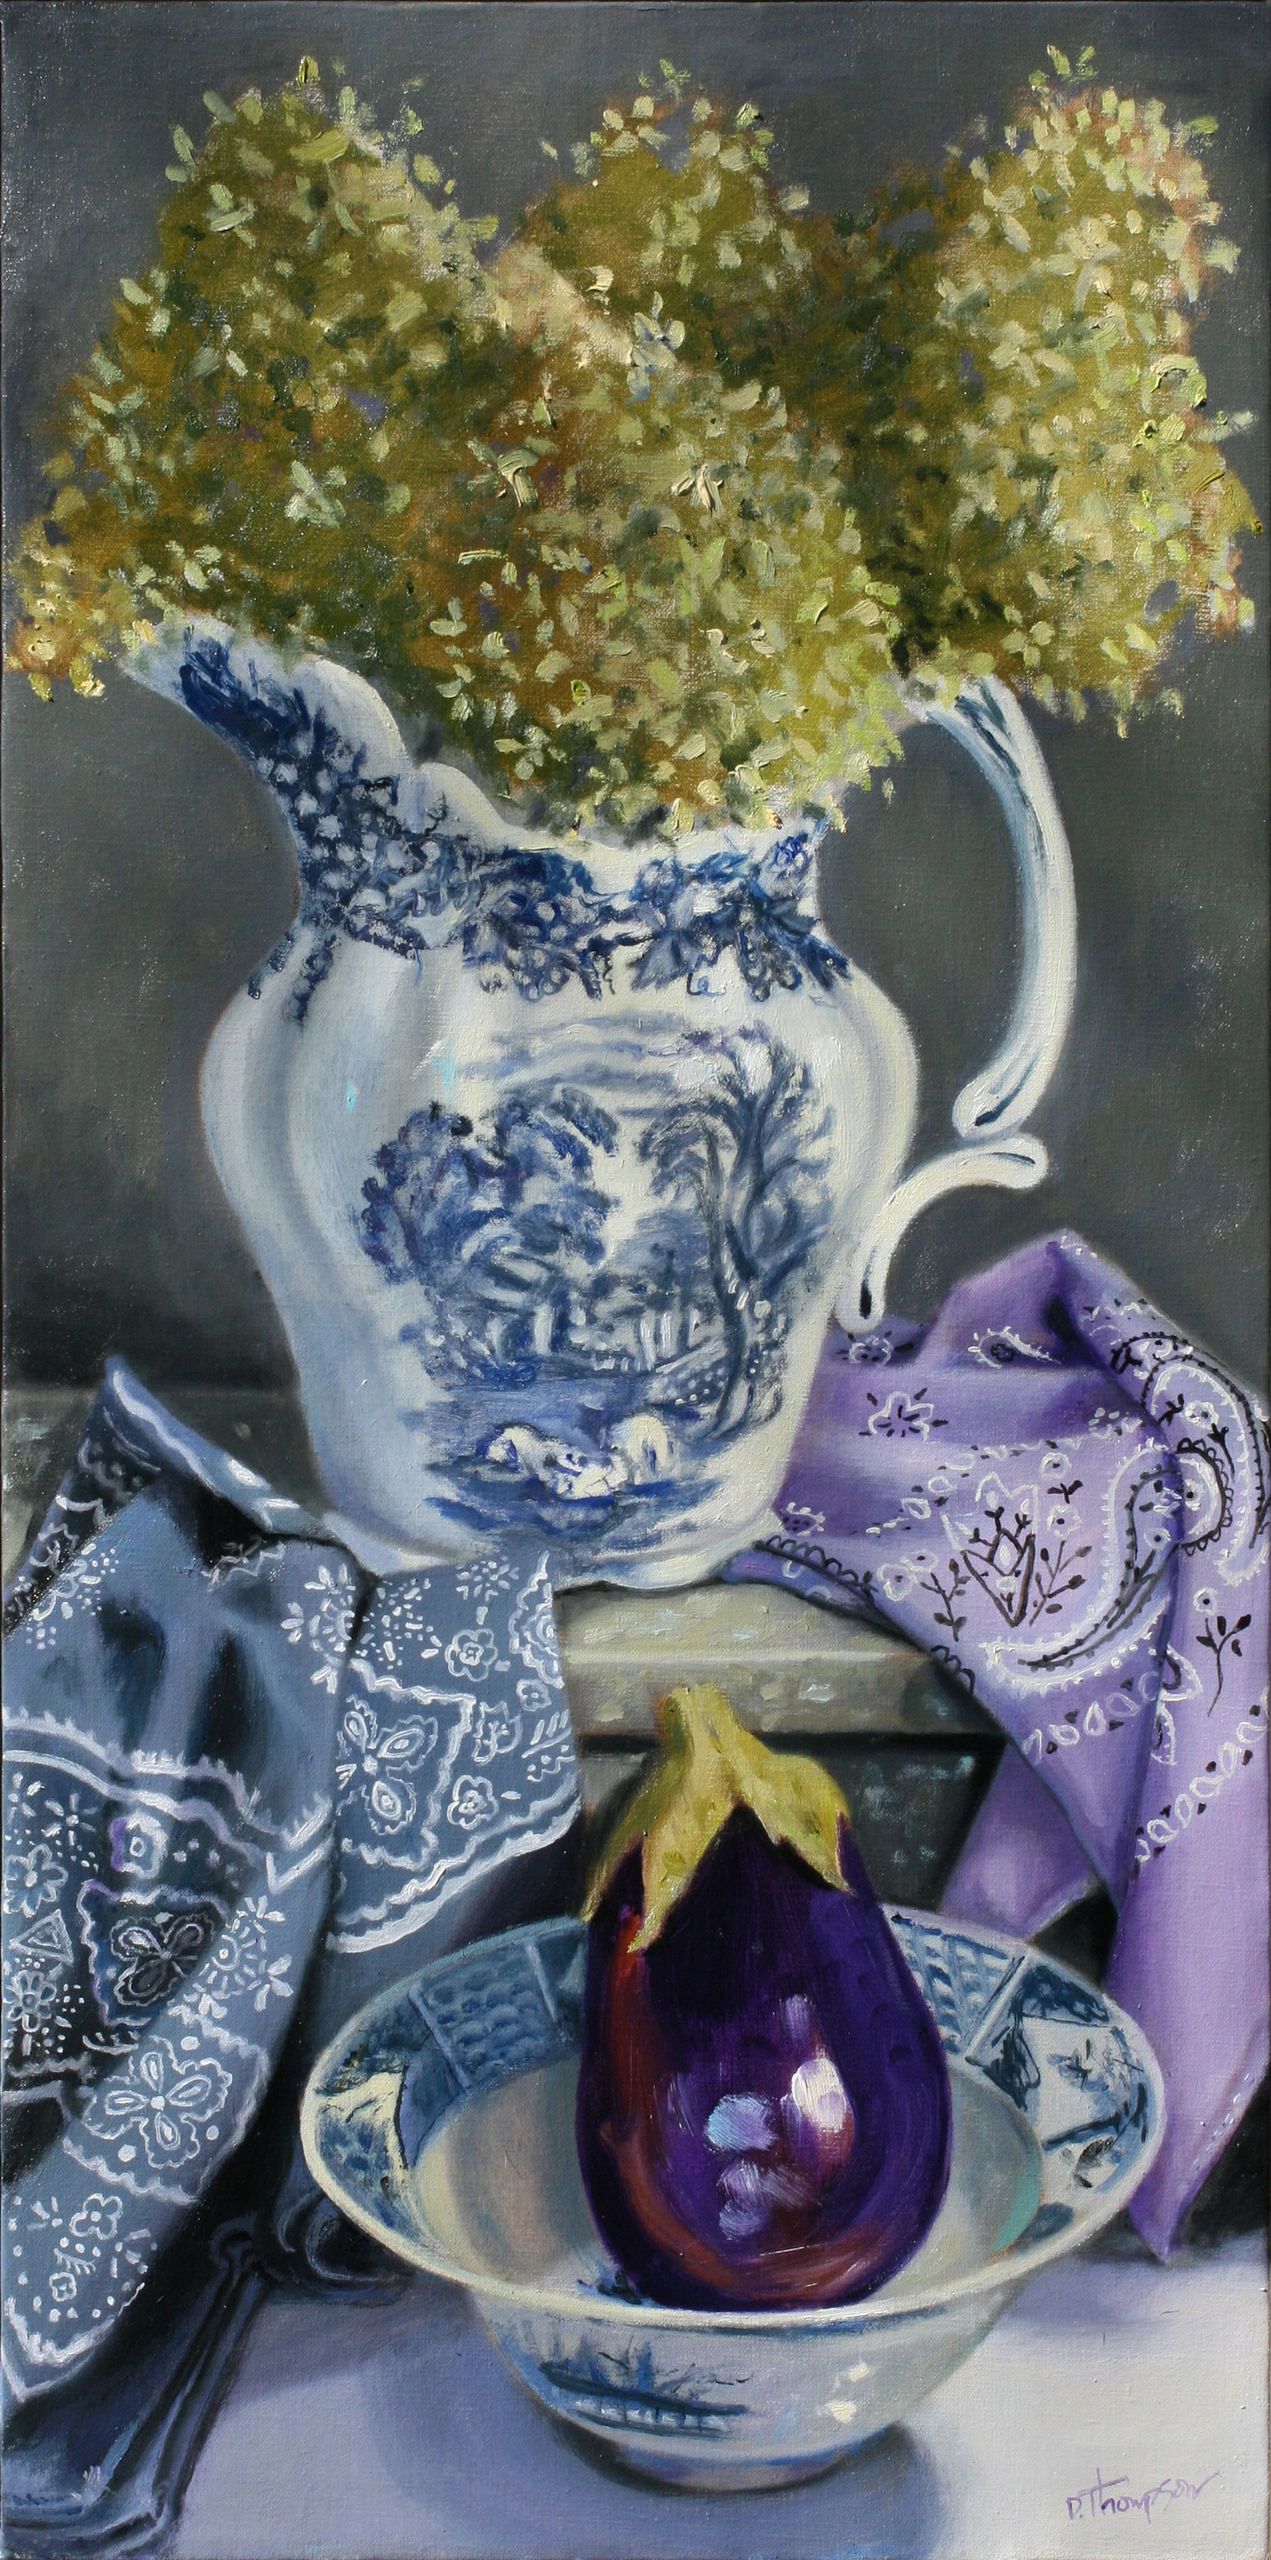 Eggplant, hydrangeas and blue & white pitcher on blue and purple bandanas